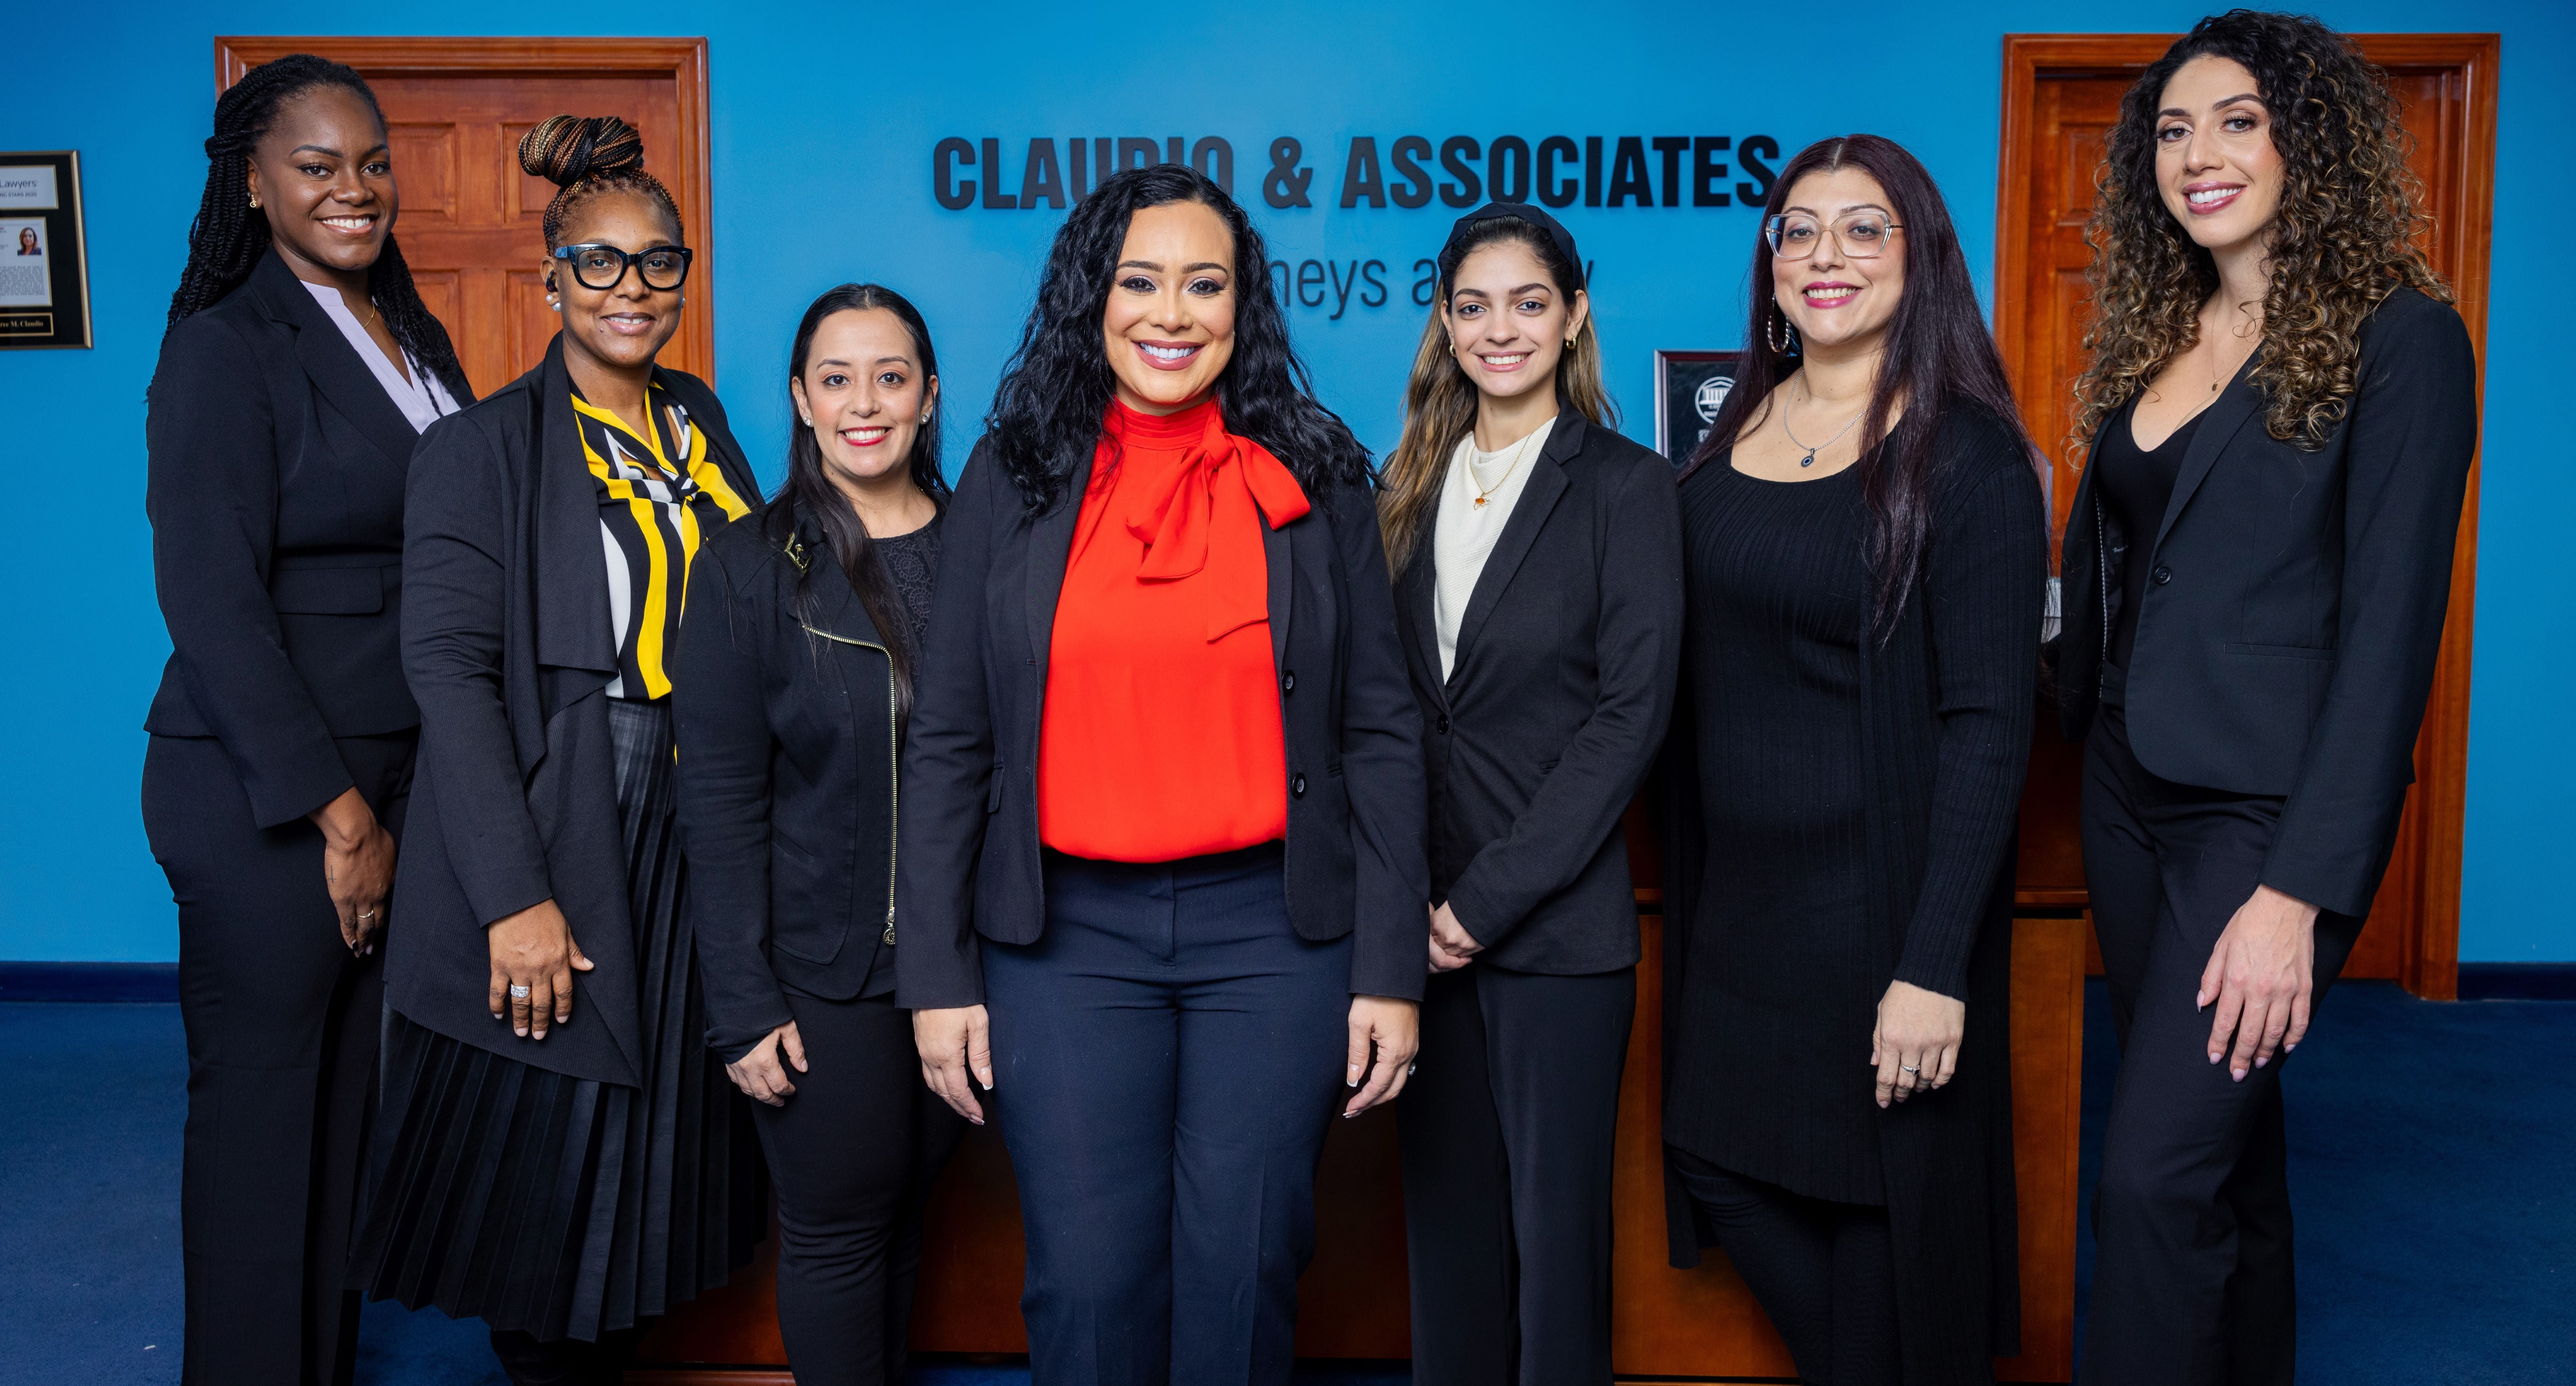 Claudio & Associates, Attorneys at Law team photo